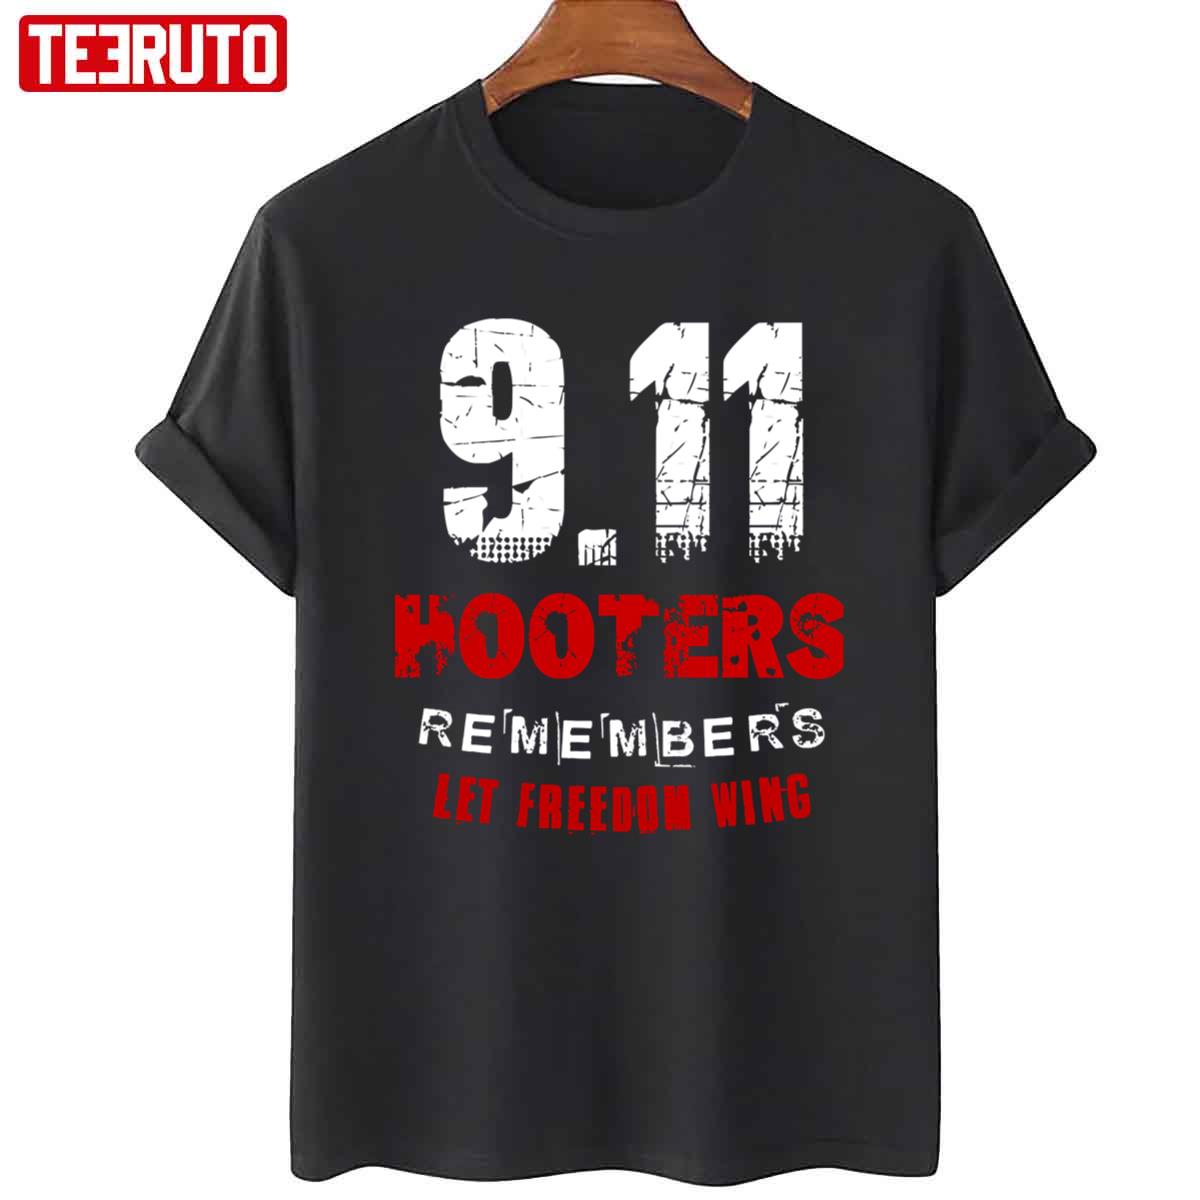 Hooters Remembers 911 Unisex Sweatshirt